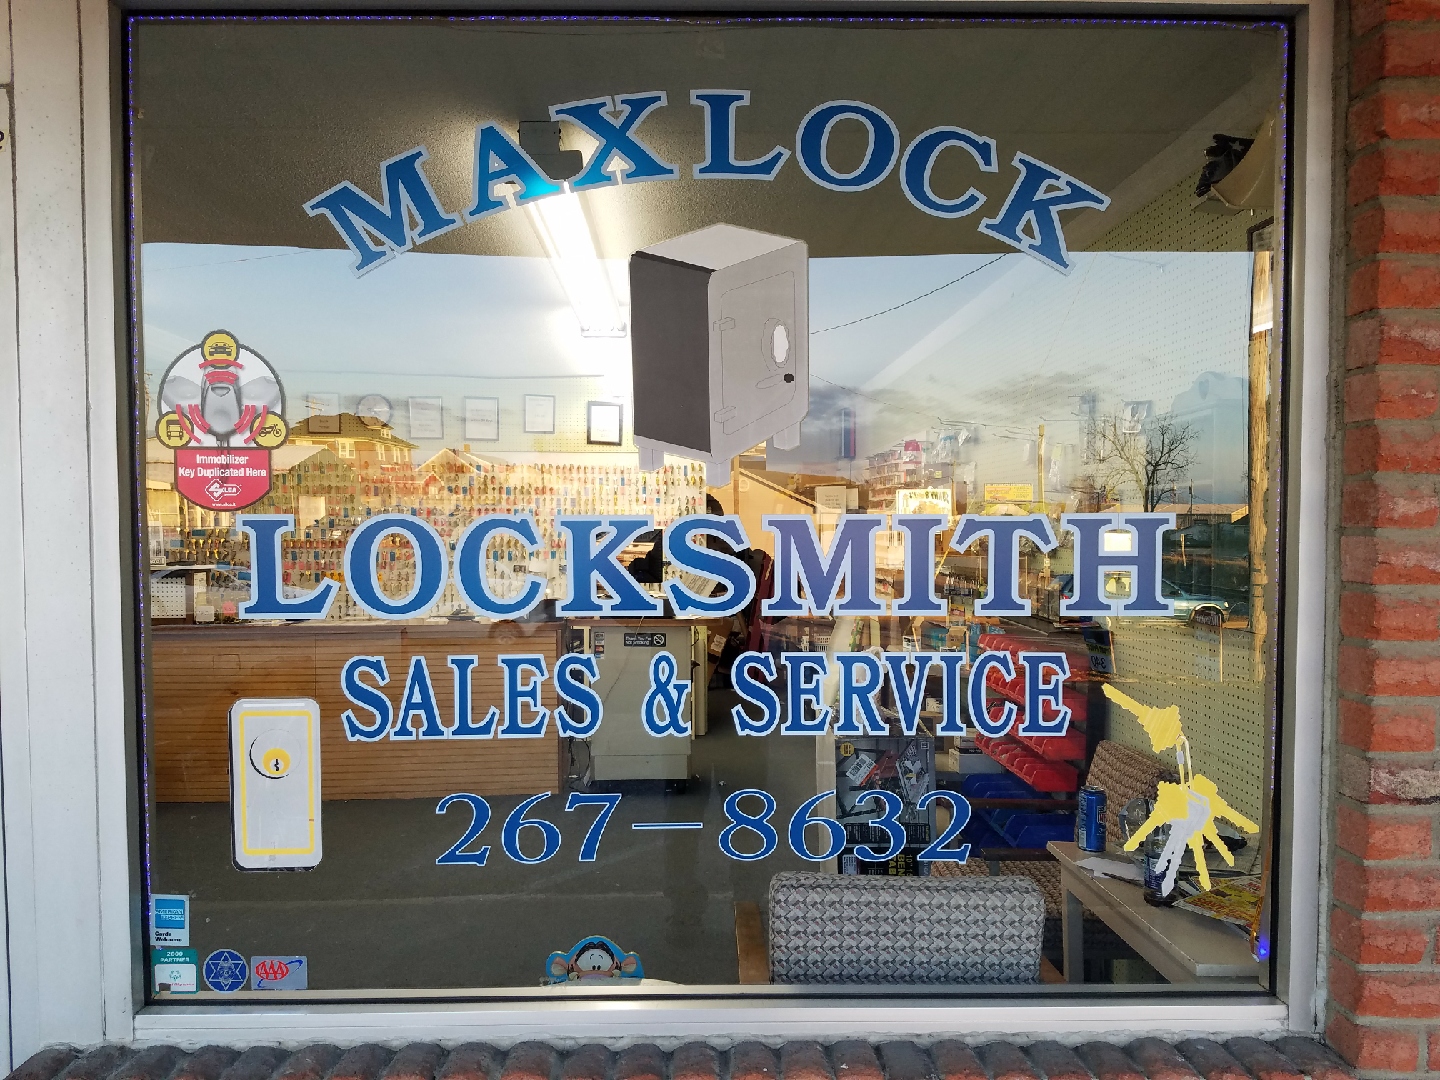 Maxlock Locksmith Service